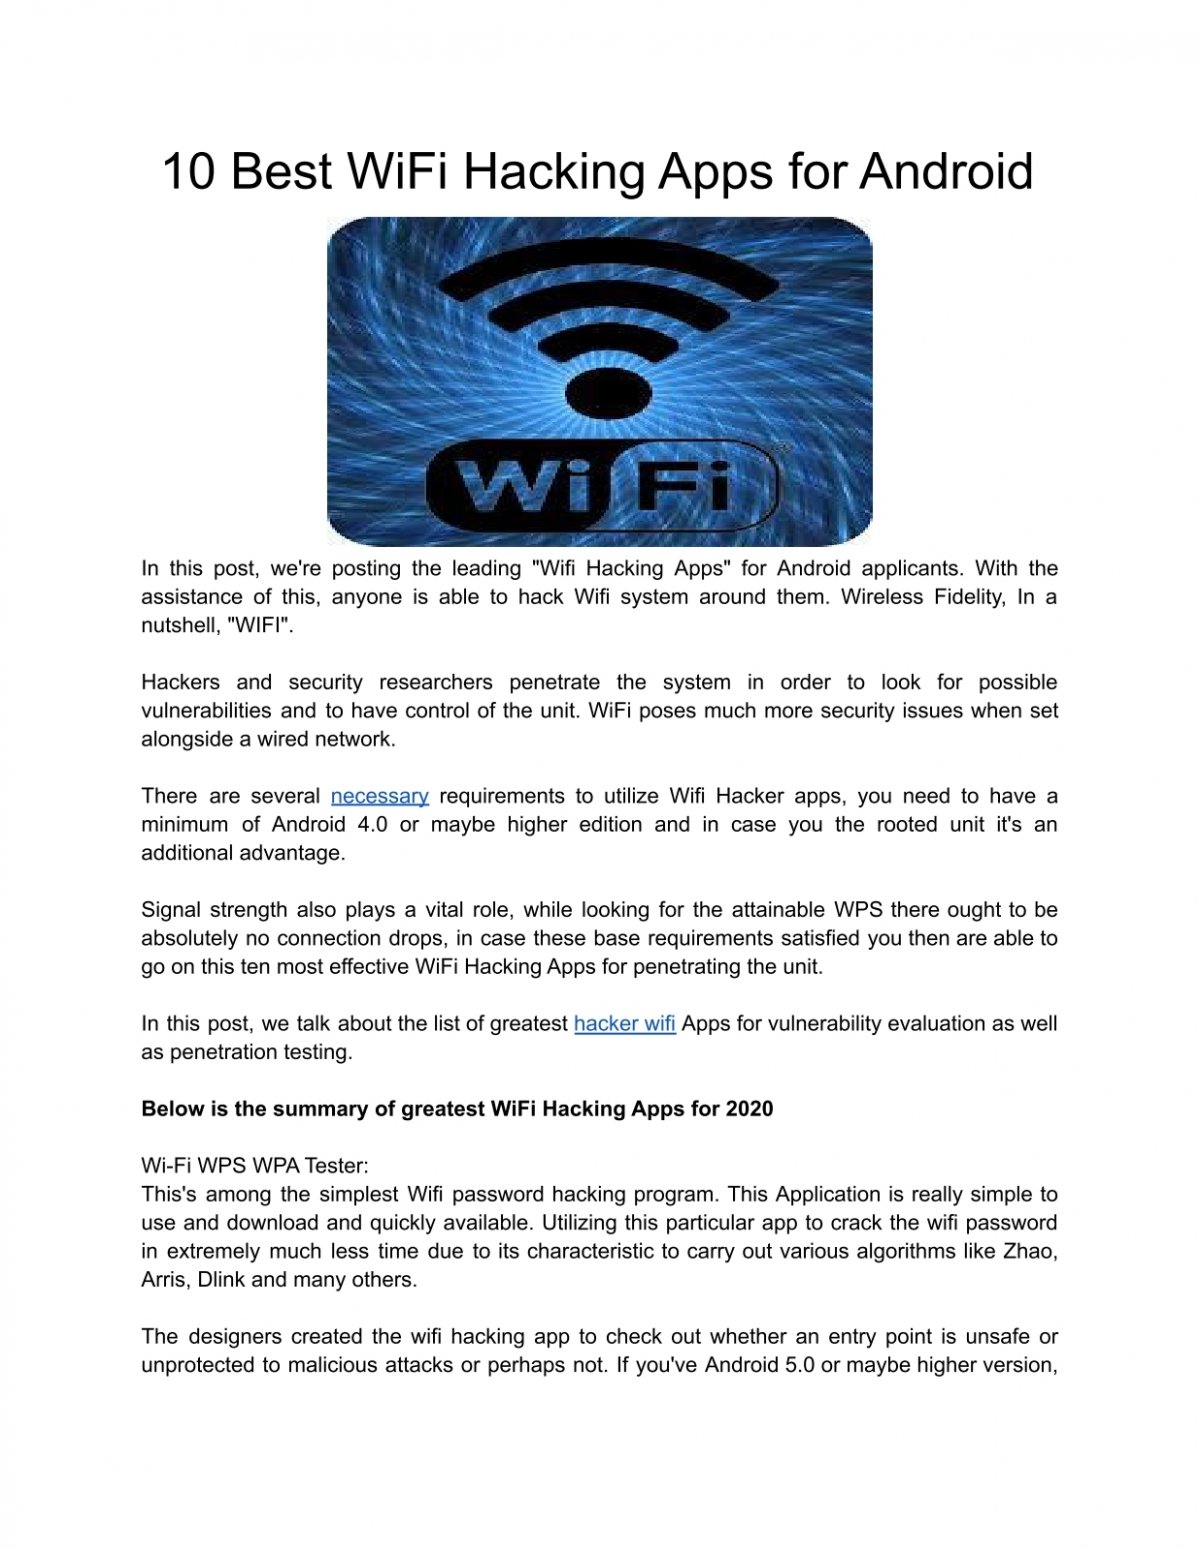 About: WIFI Password Hacker App Prank (Google Play version